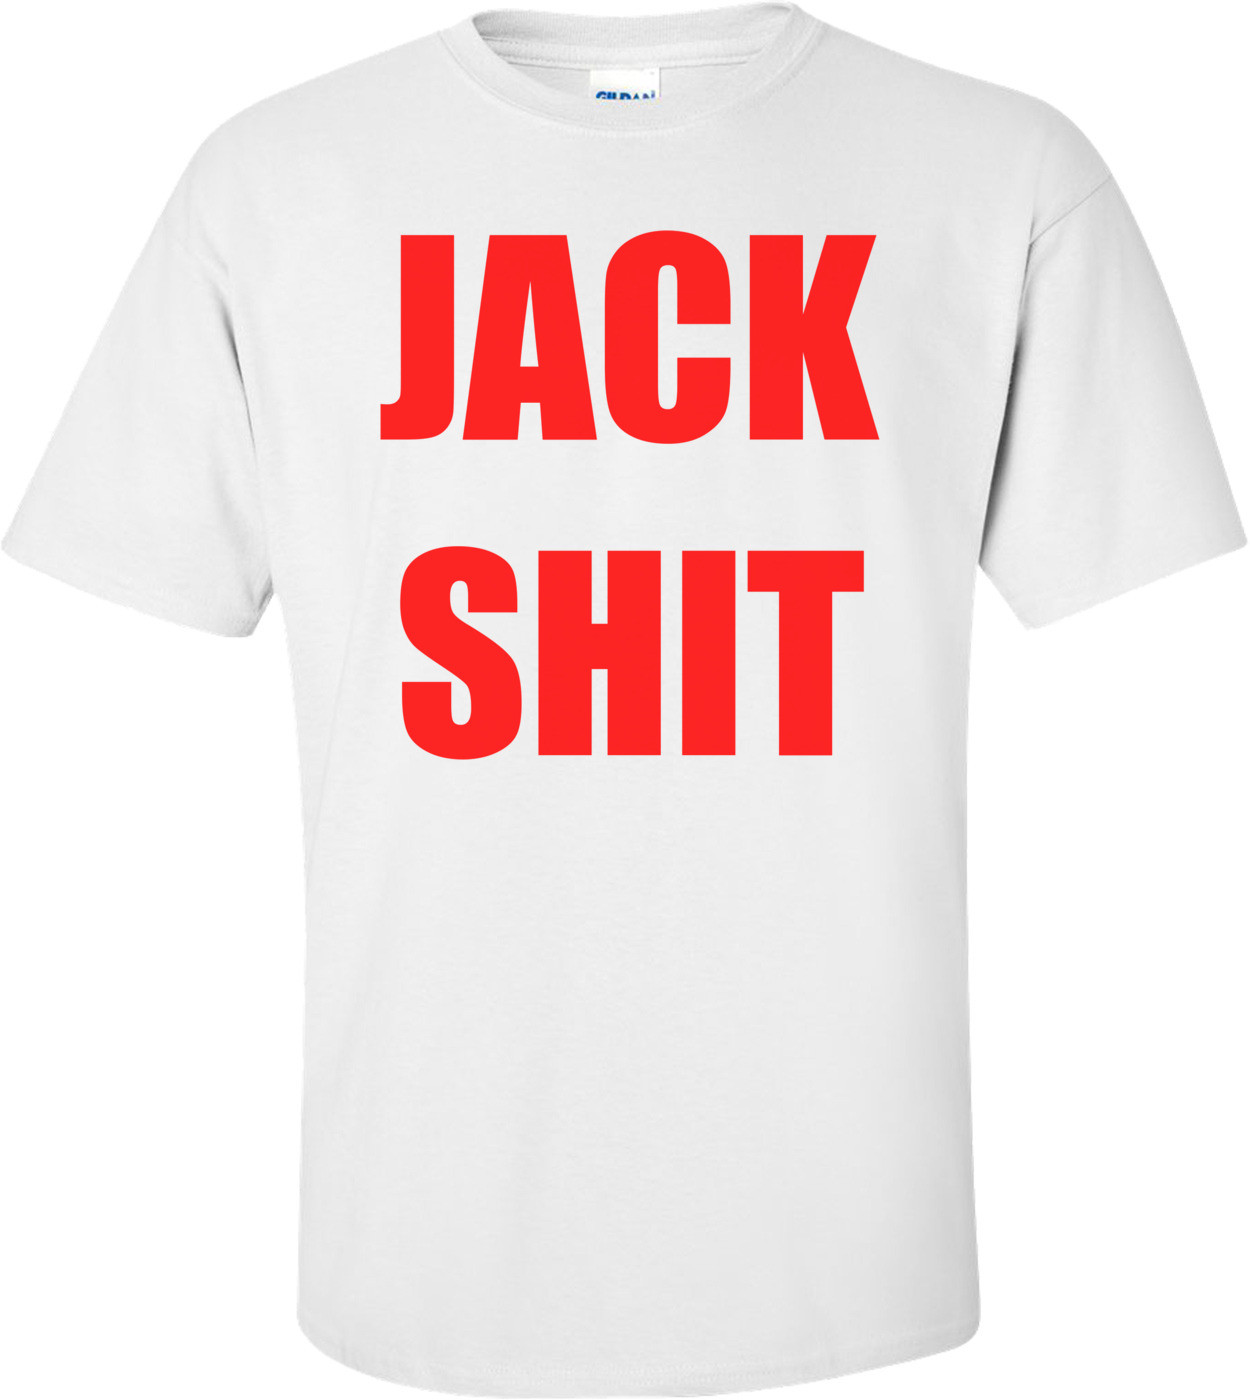 JACK SHIT Shirt